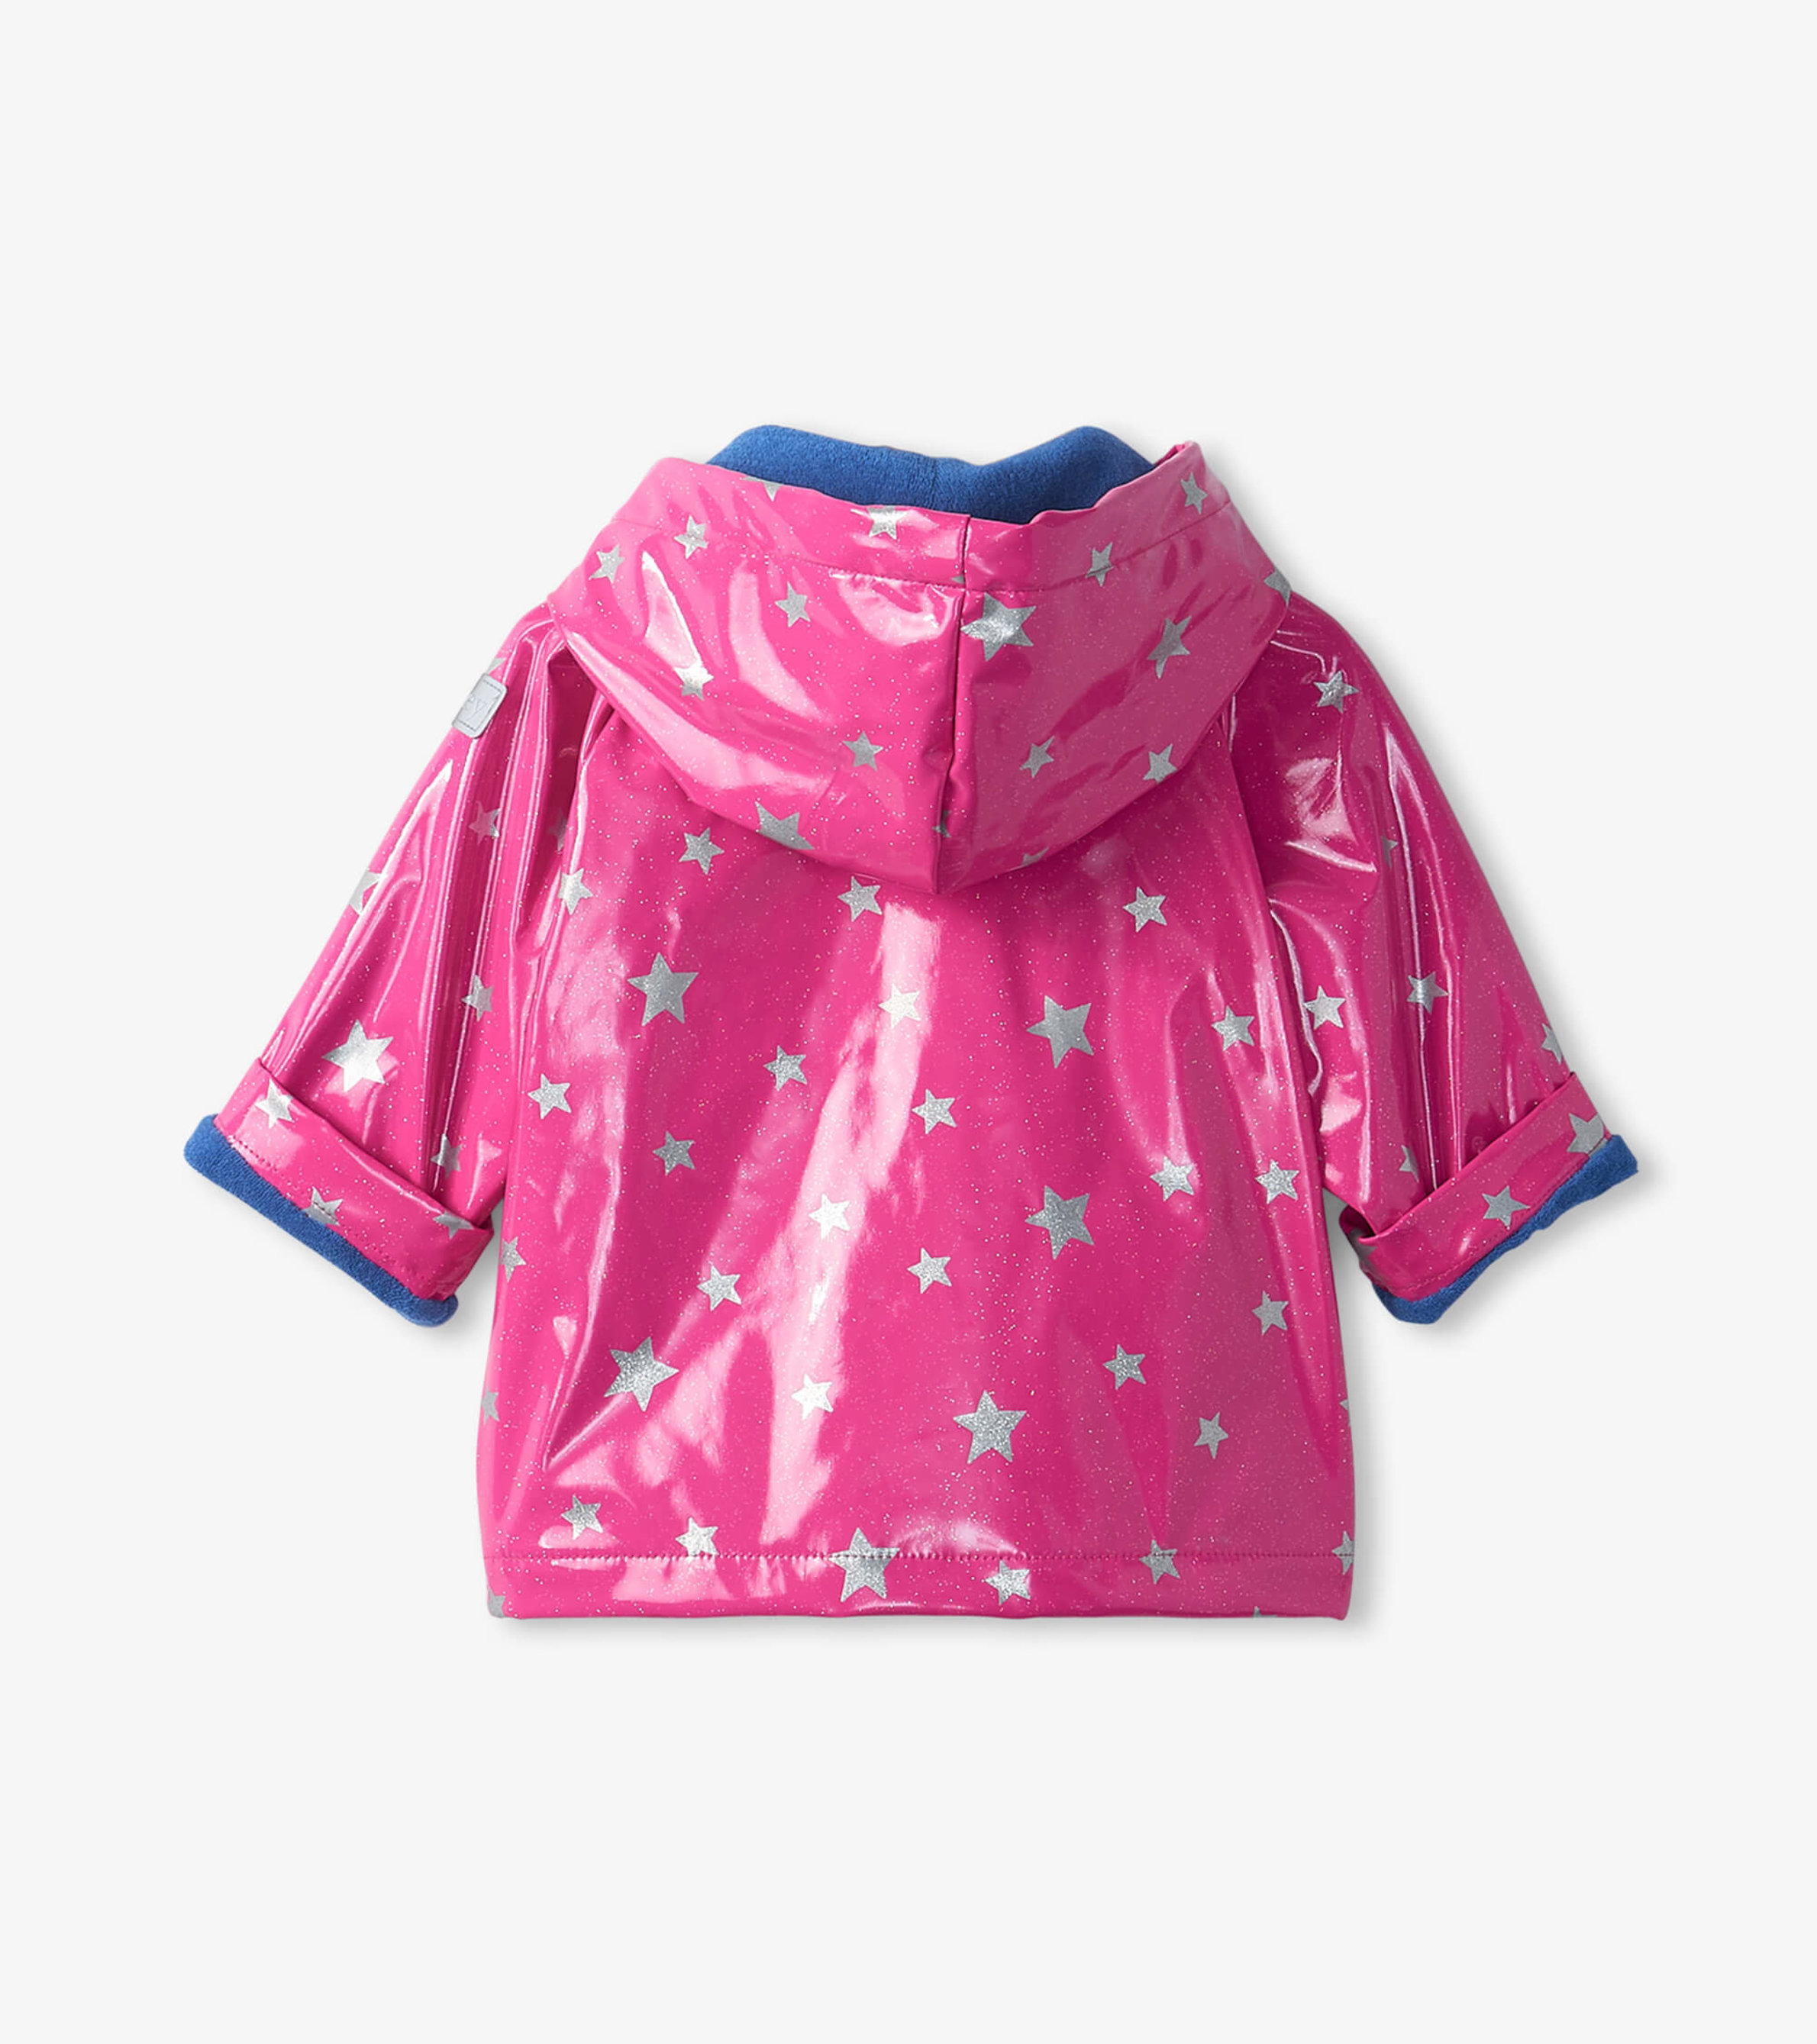 Hatley Kids' Glitter Star Print Fleece Lined Rain Coat, Raspberry